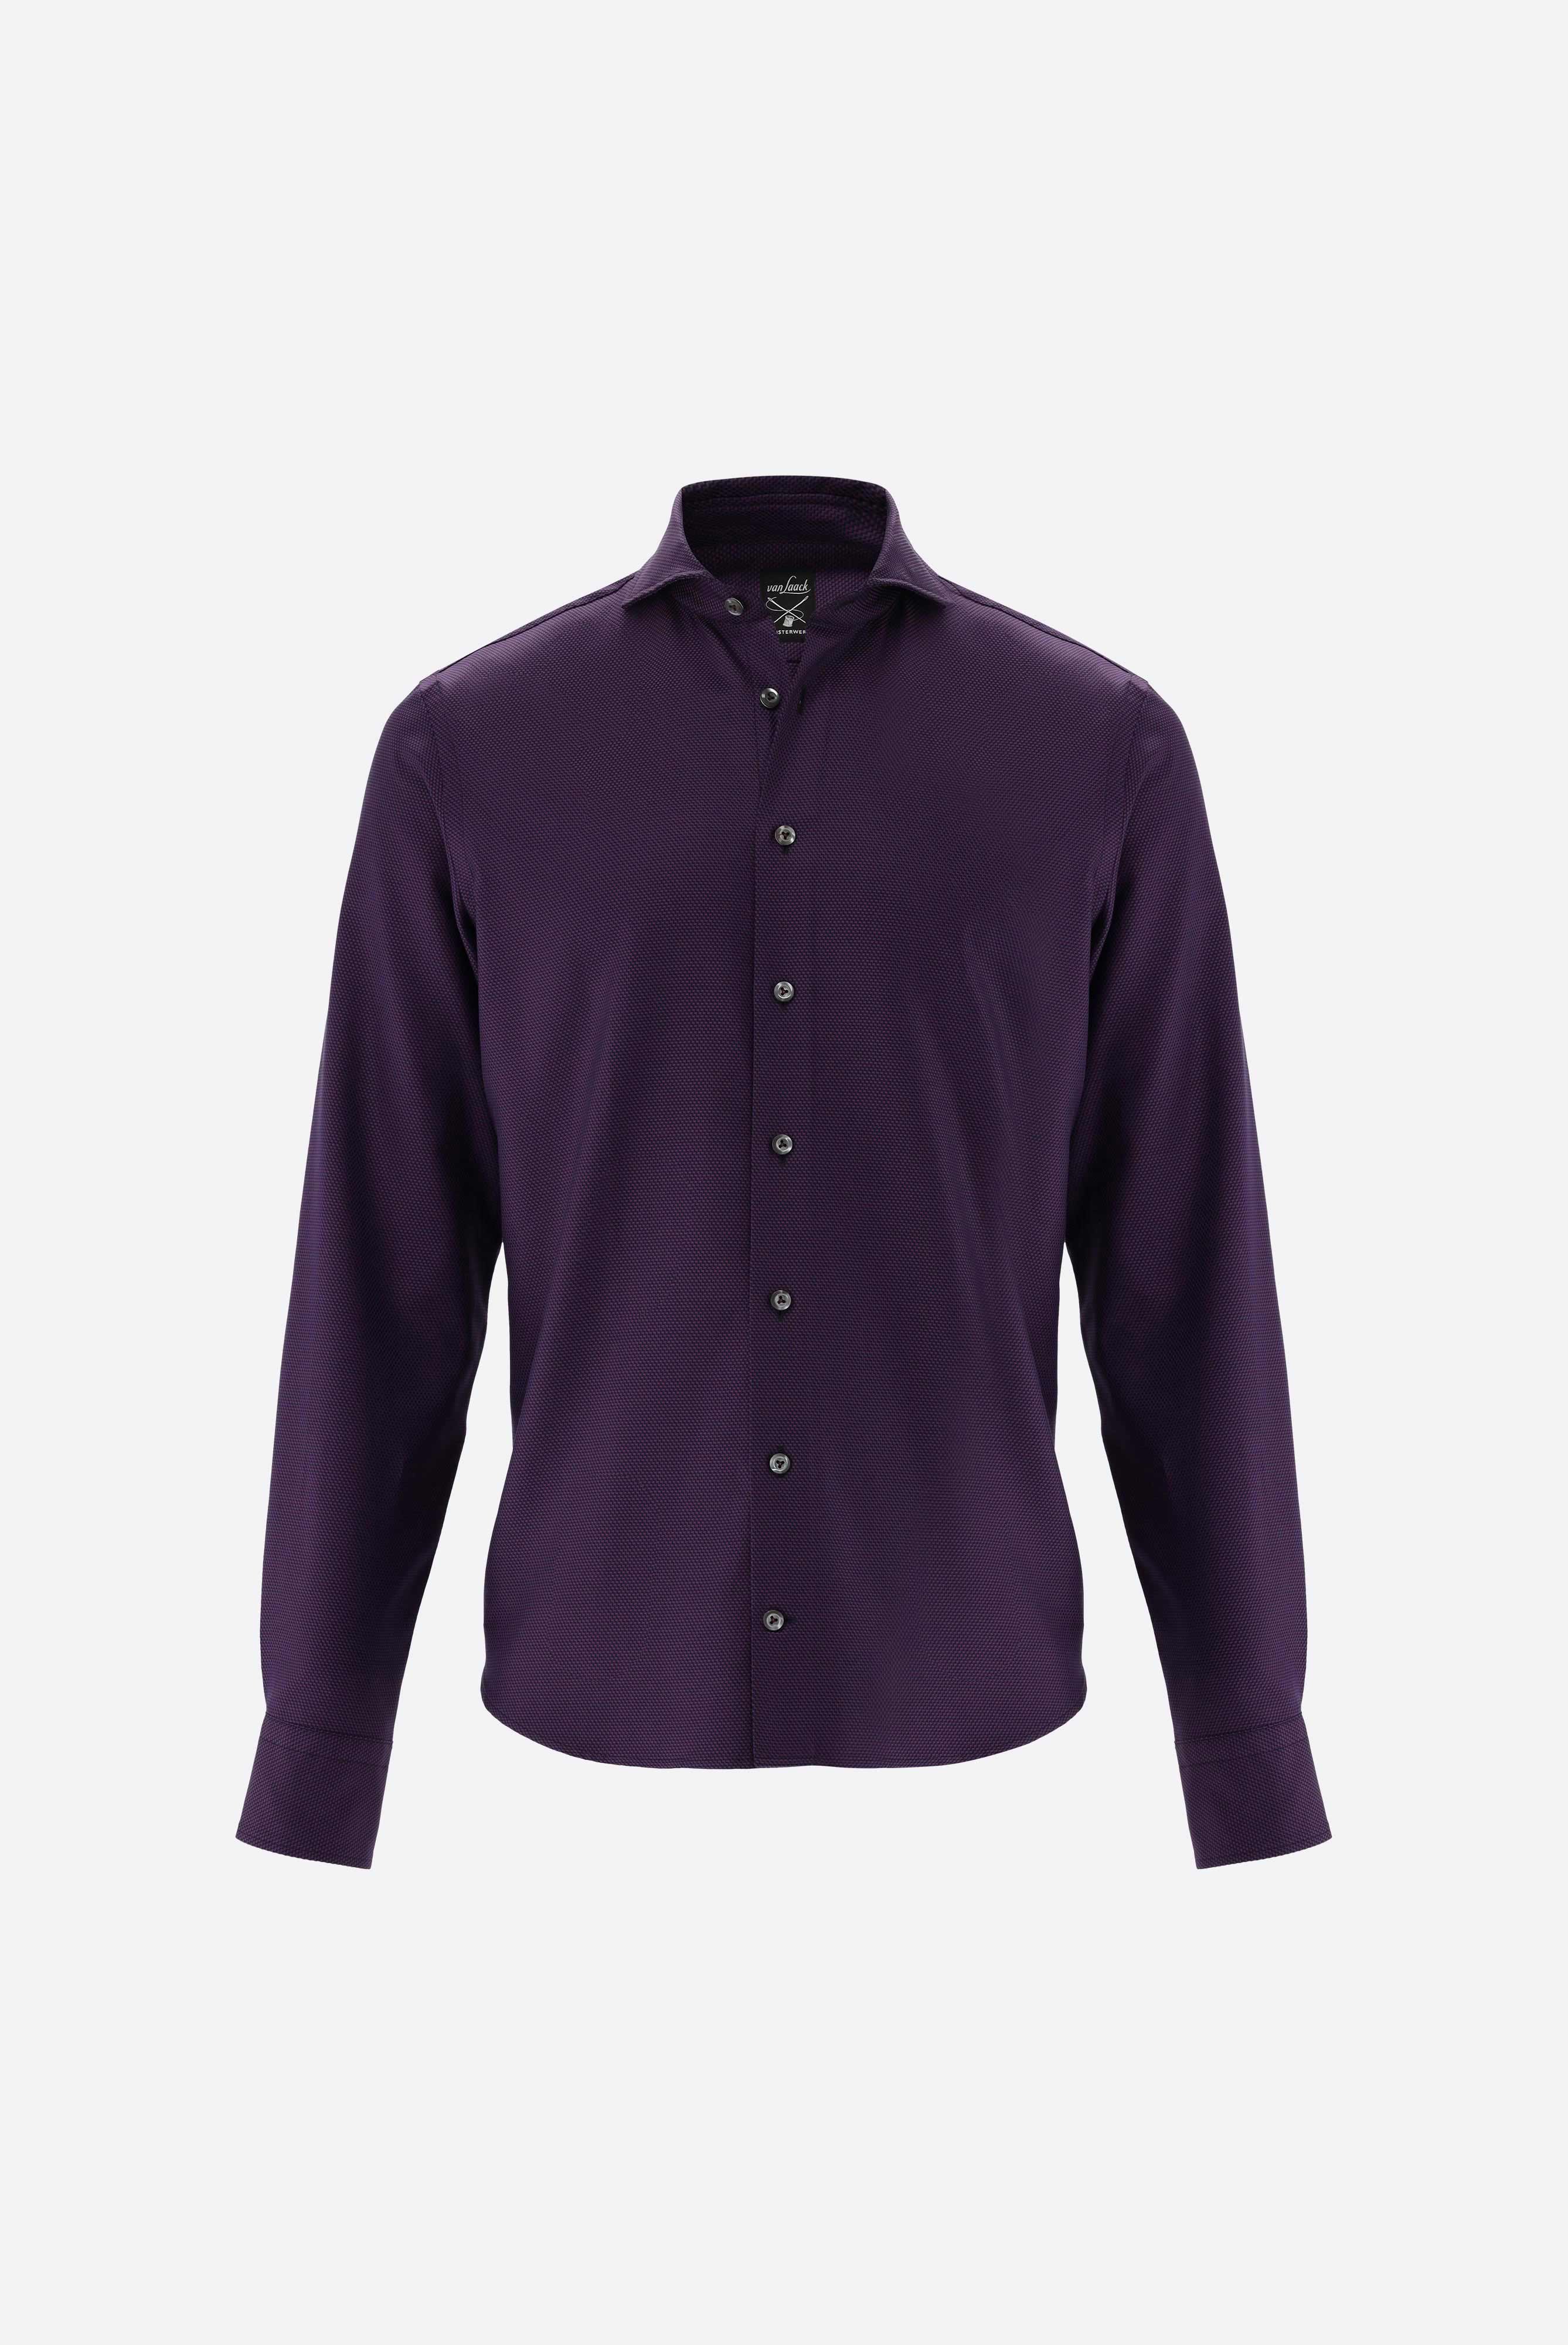 Casual Shirts+Dobby Structured Shirt Slim Fit+20.2015.AV.151020.796.38